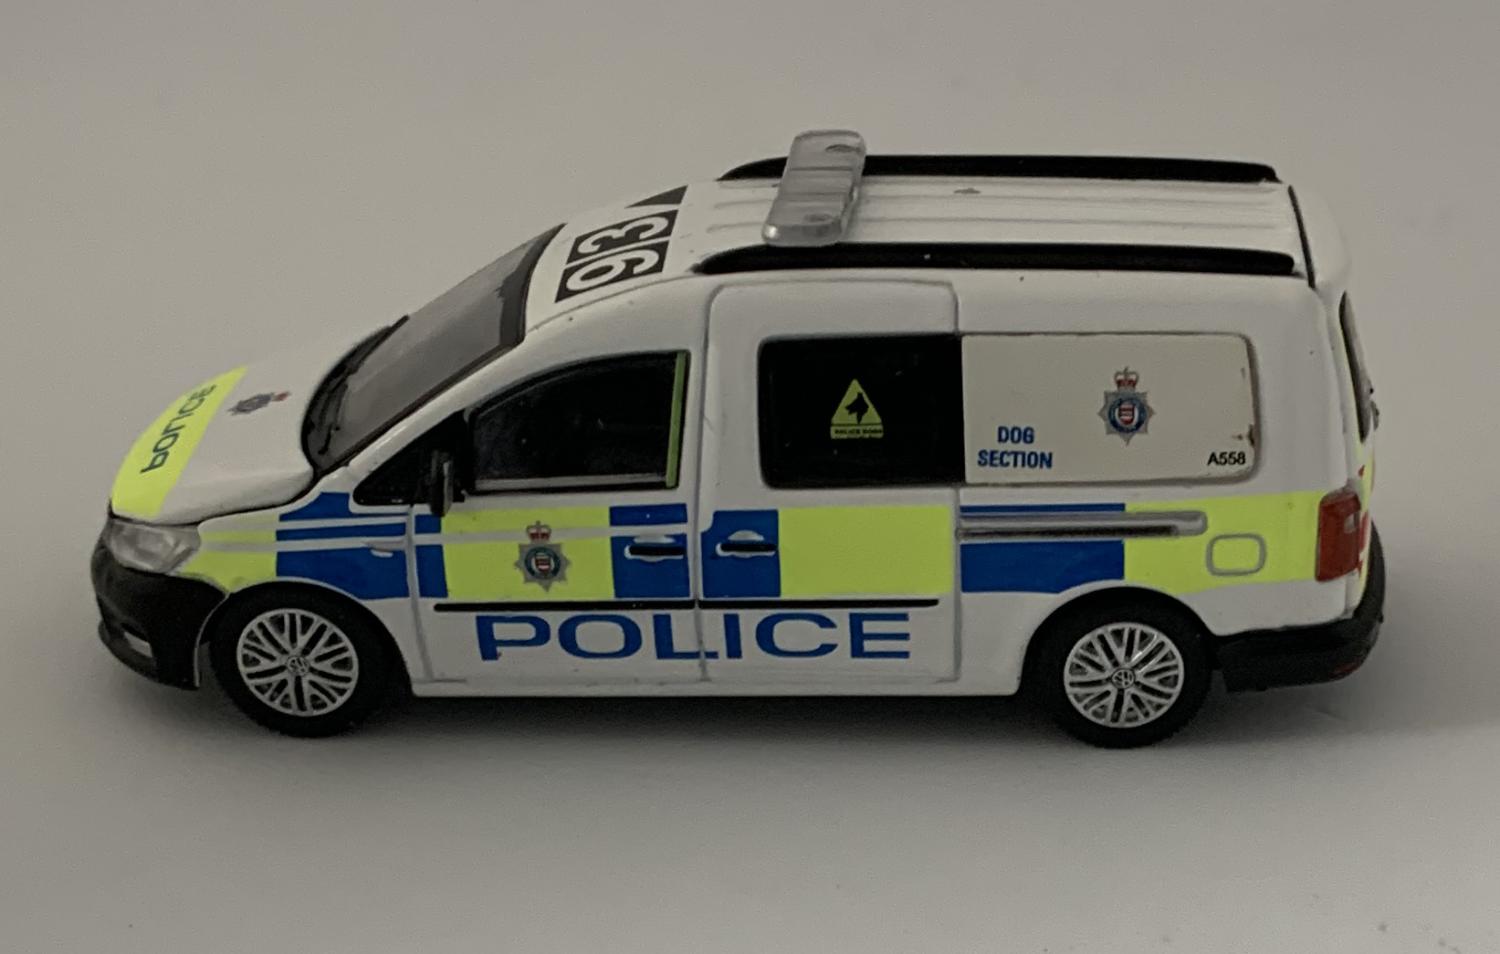 VW Caddy Maxi London Police (Police Dog Unit) 1:64 scale model from ERA Car